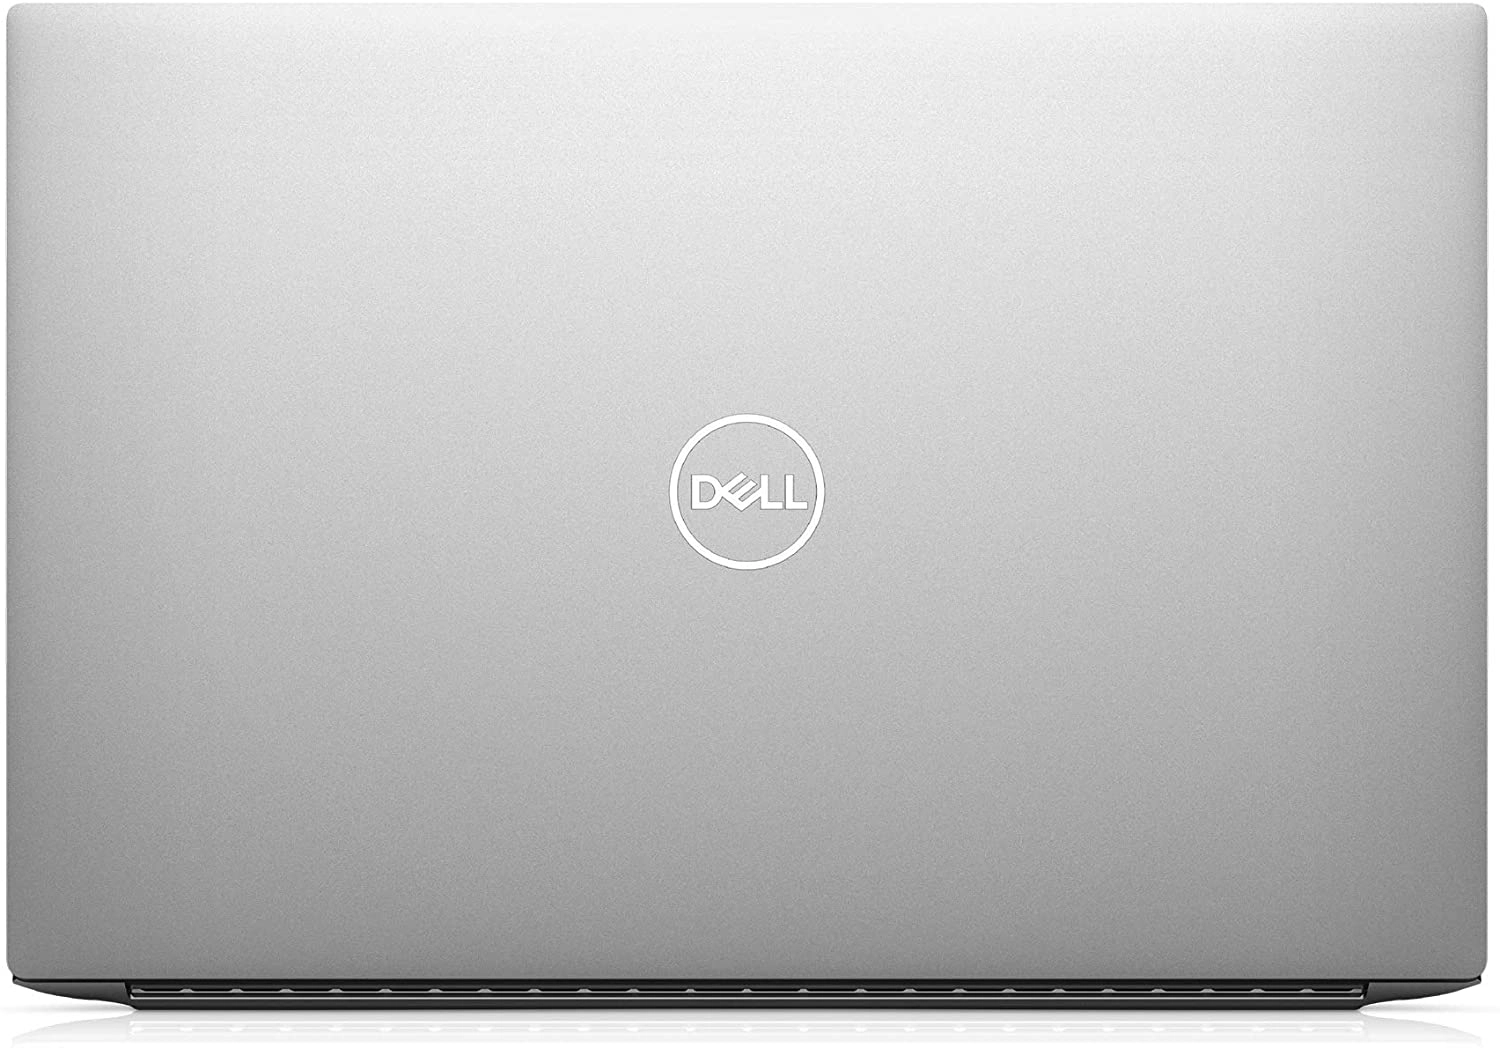 Dell XPS9500-7845SLV-PUS laptop image